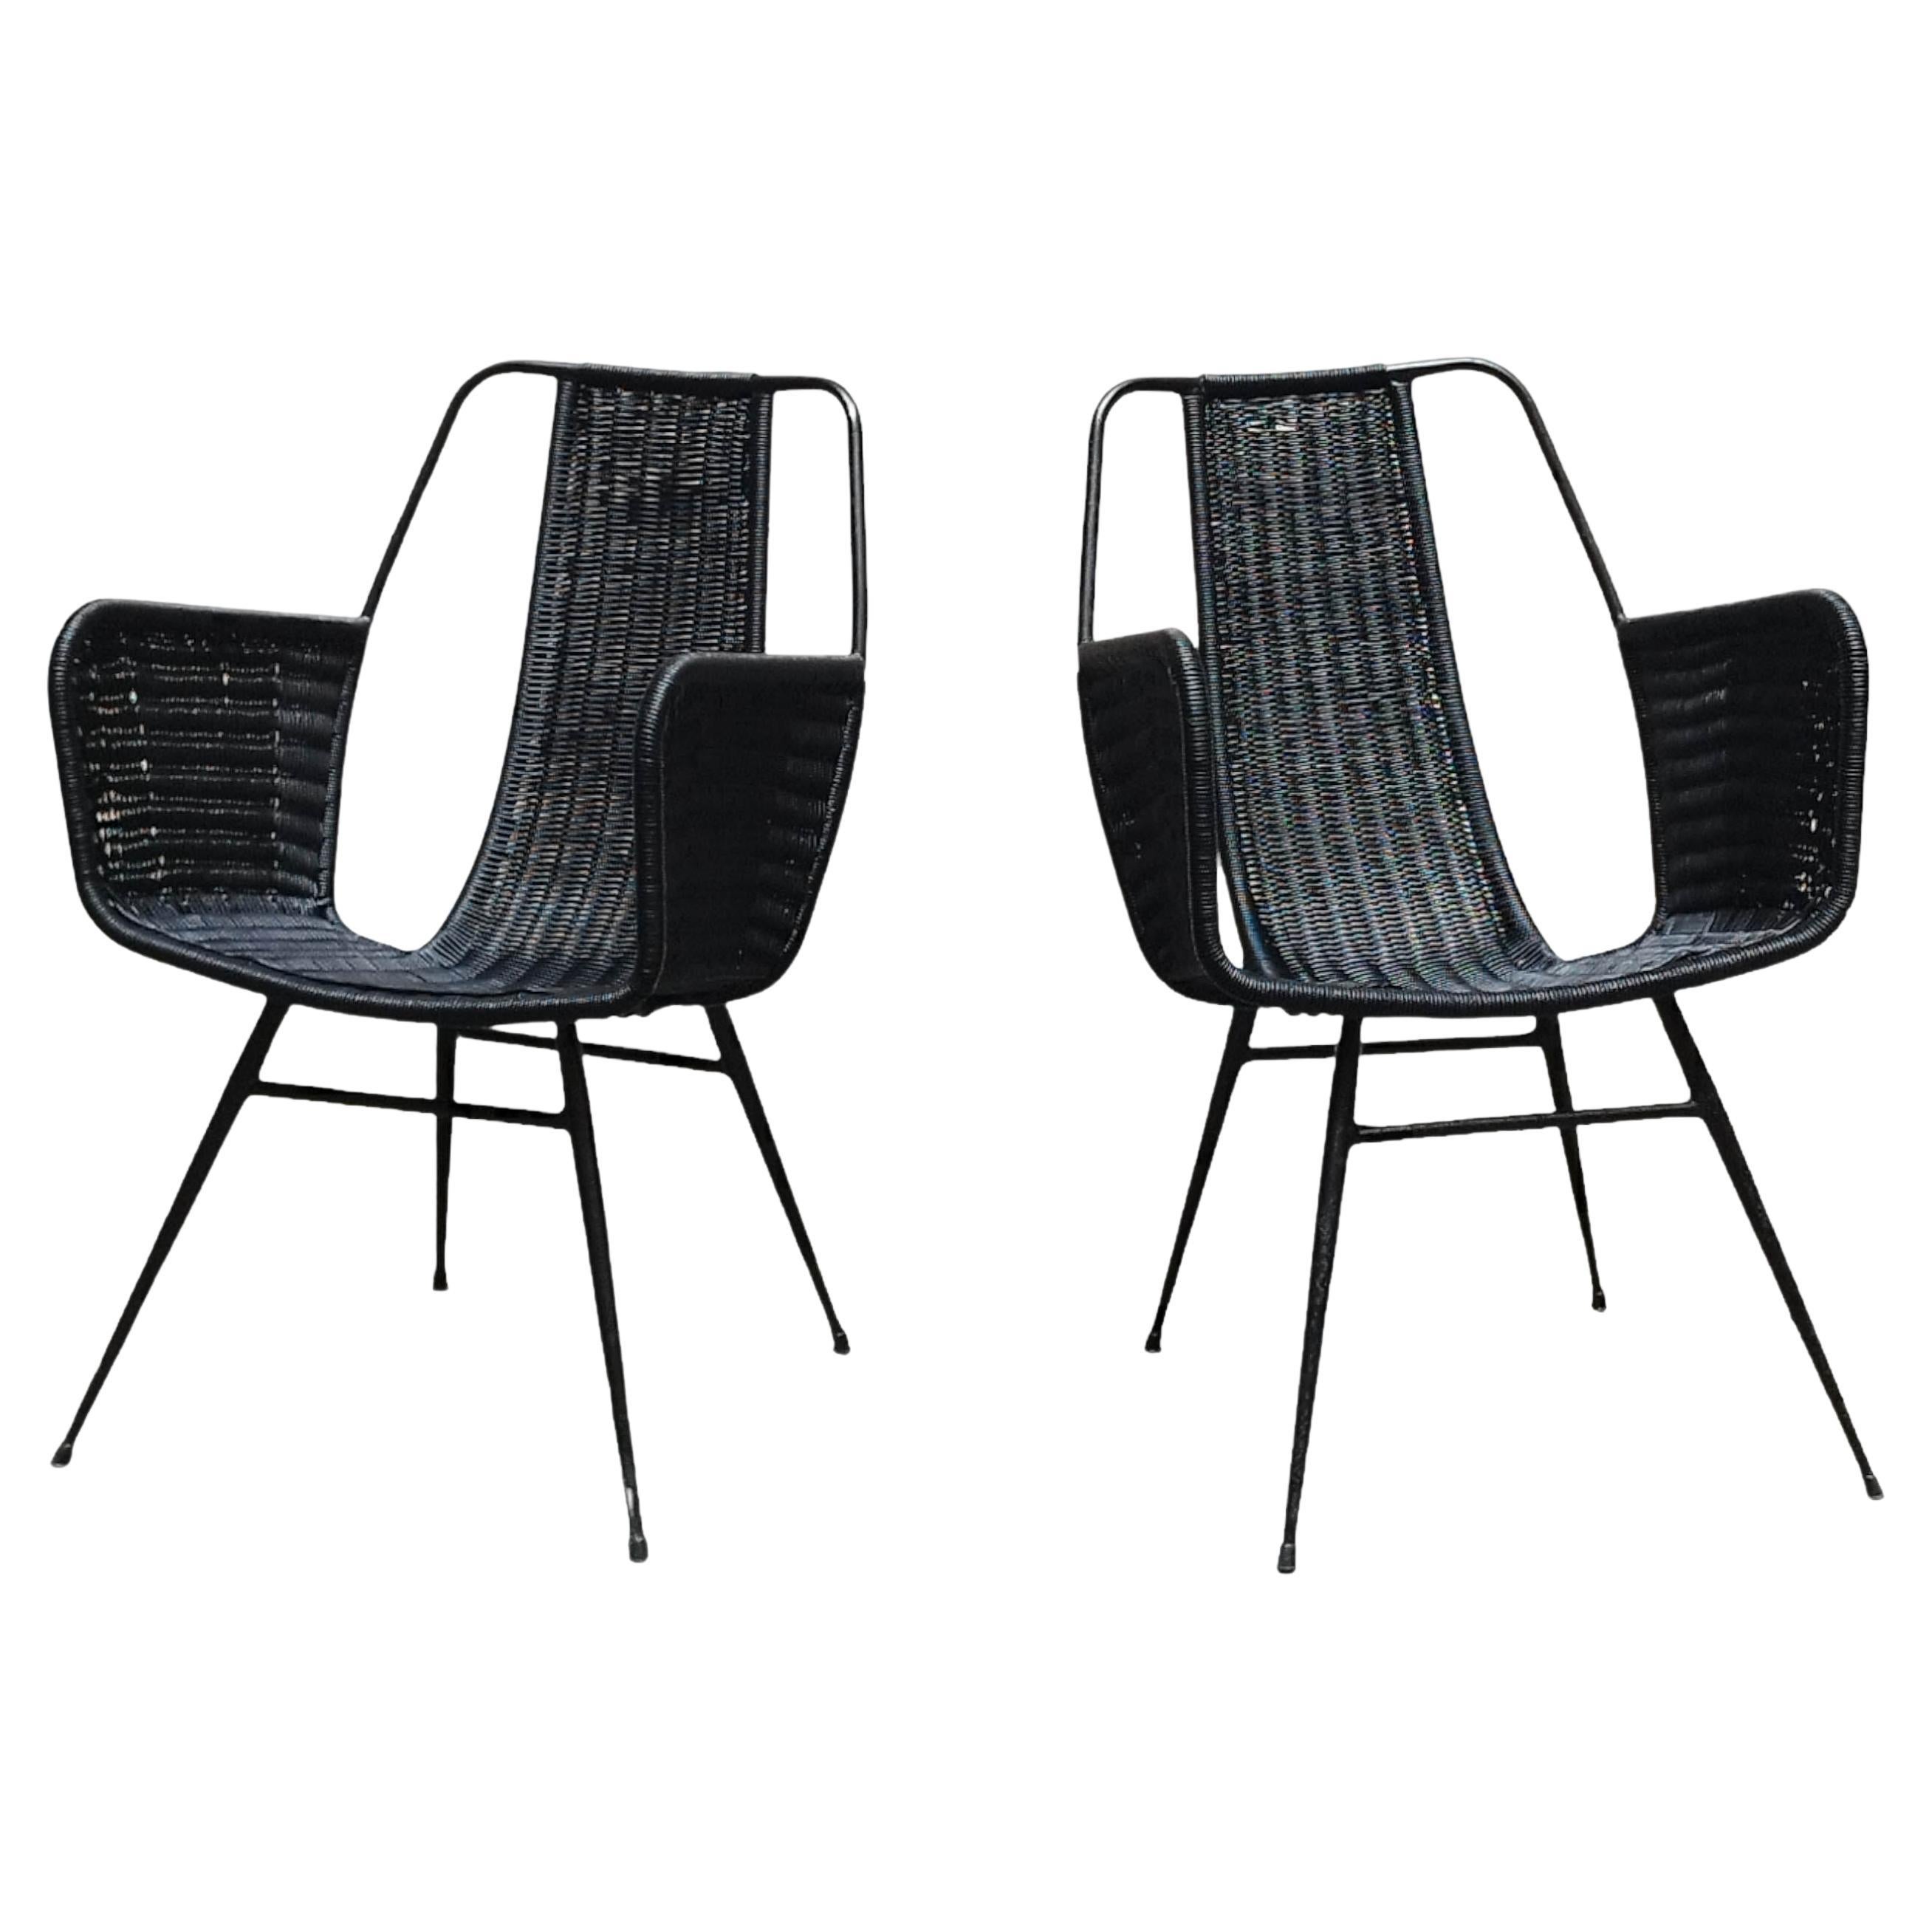 Gastone Rinaldi, Paar Outdoor-Sessel aus gewebtem Kunststoff, Italien 1960er/70er Jahre